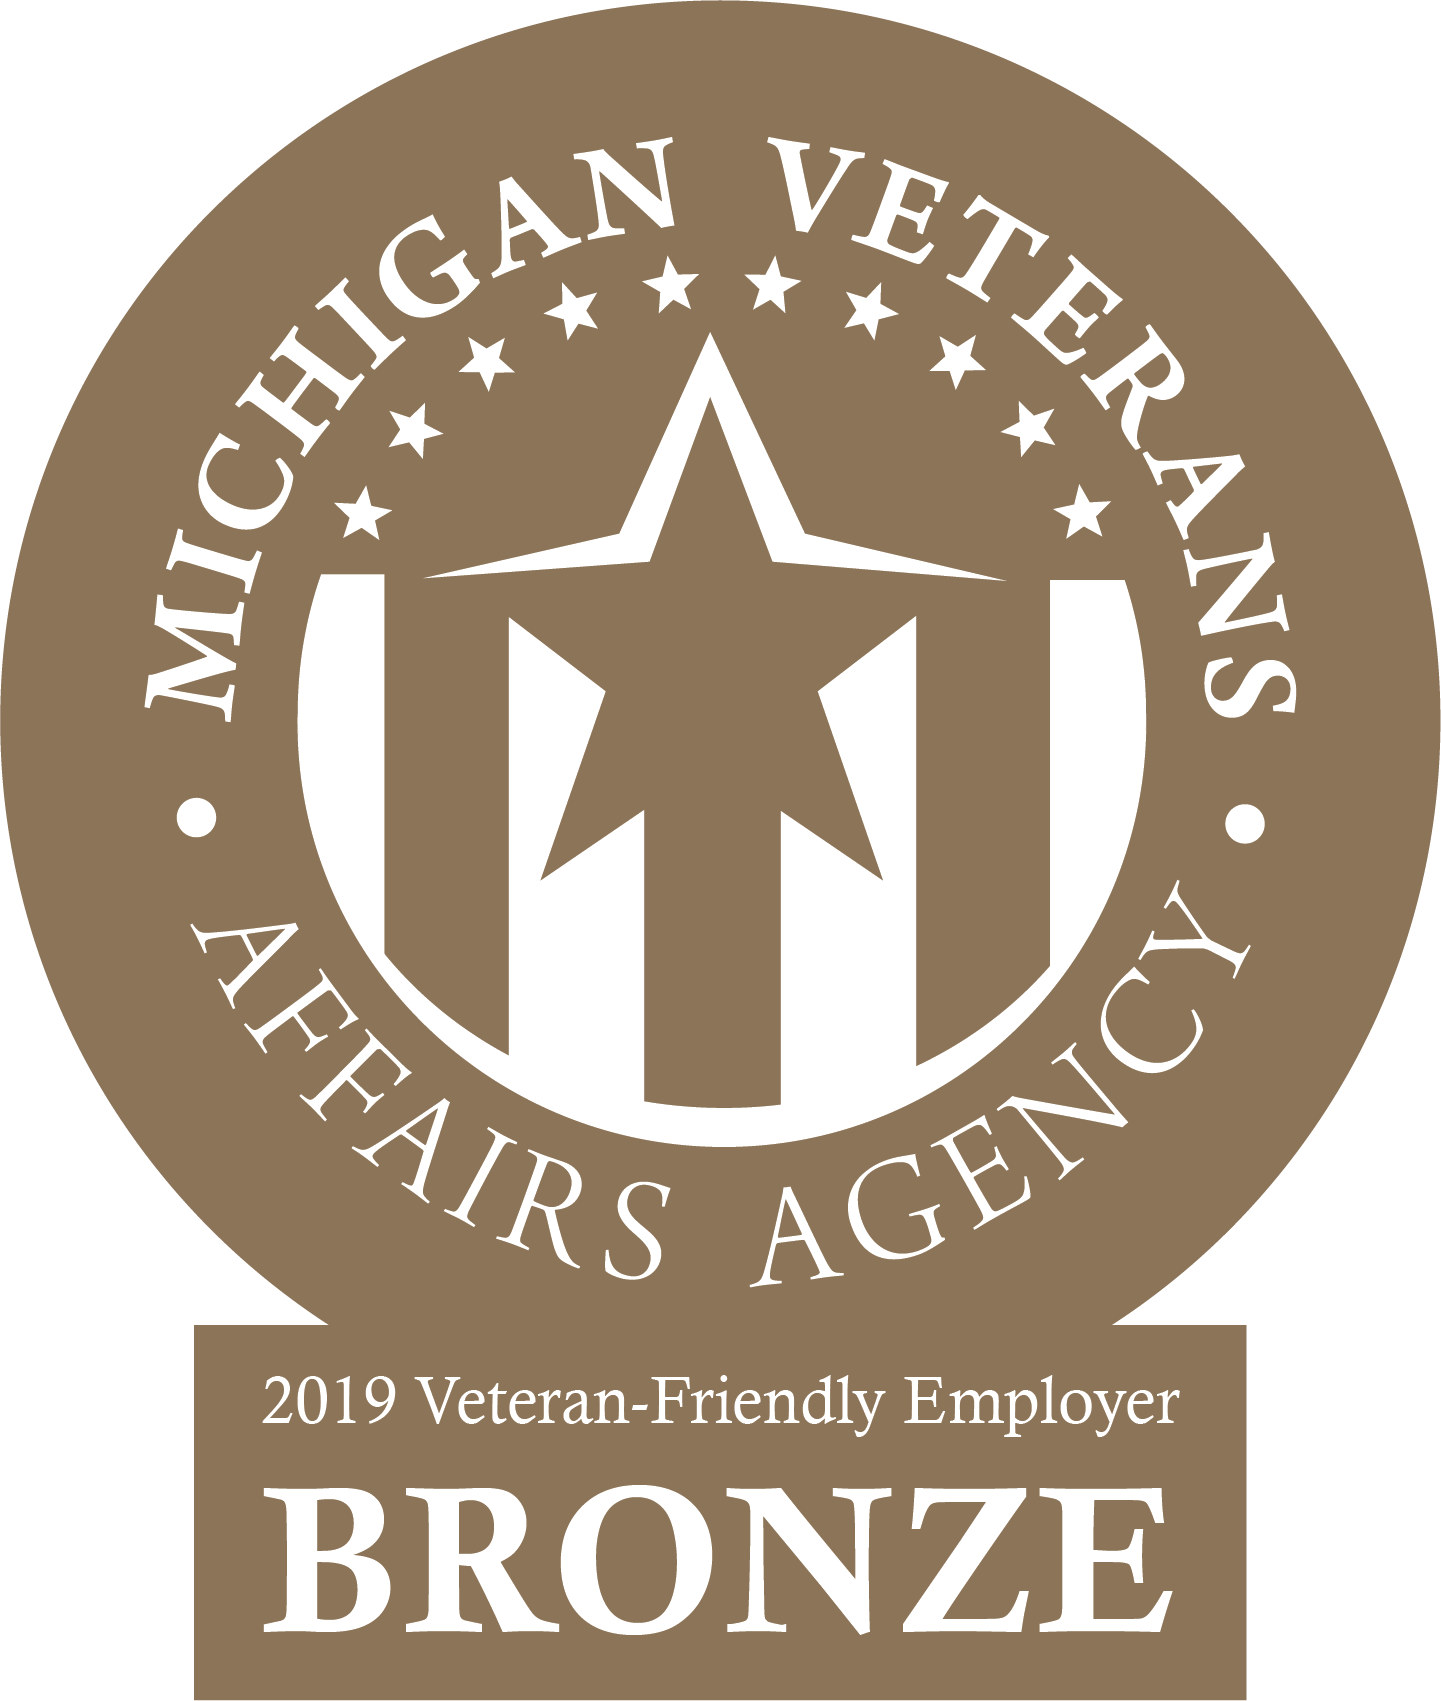 Bronze Certified Employer Michigan Veteran Affairs